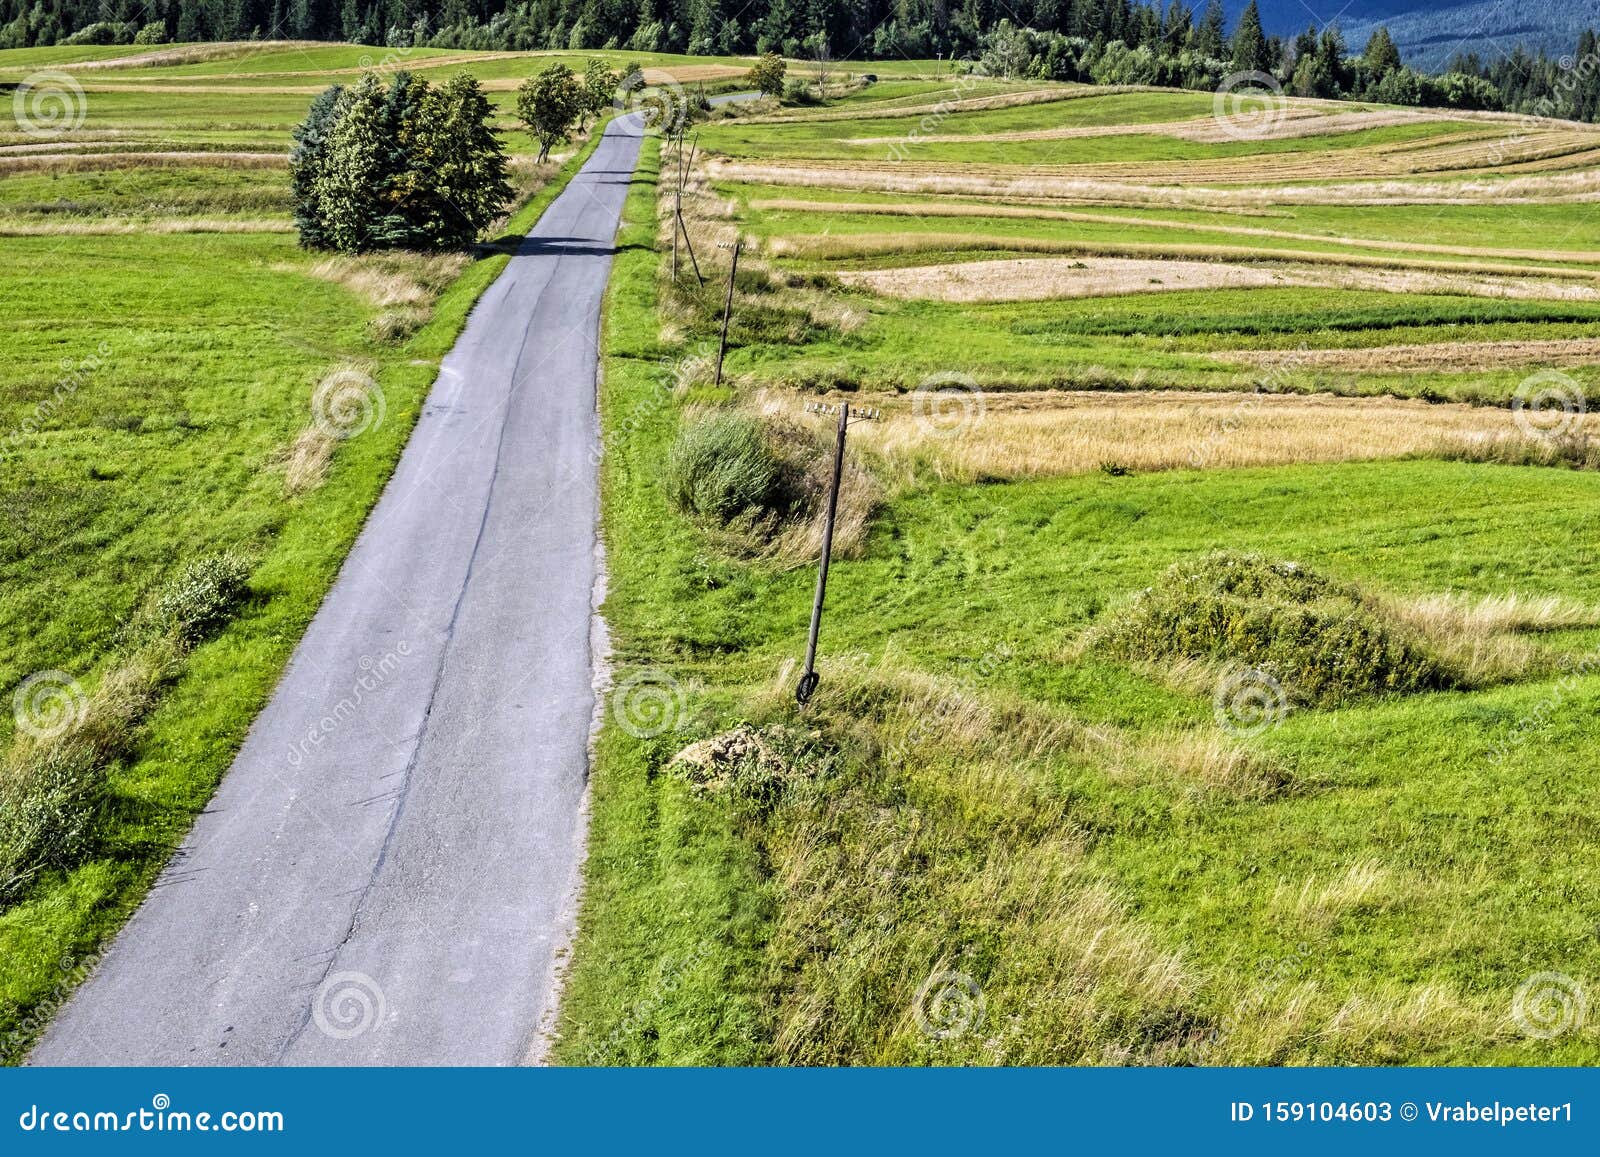 Empty road, Orava, Slovakia, natural scene. Empty road, Orava, Slovak republic. Seasonal natural scene. Travel destination